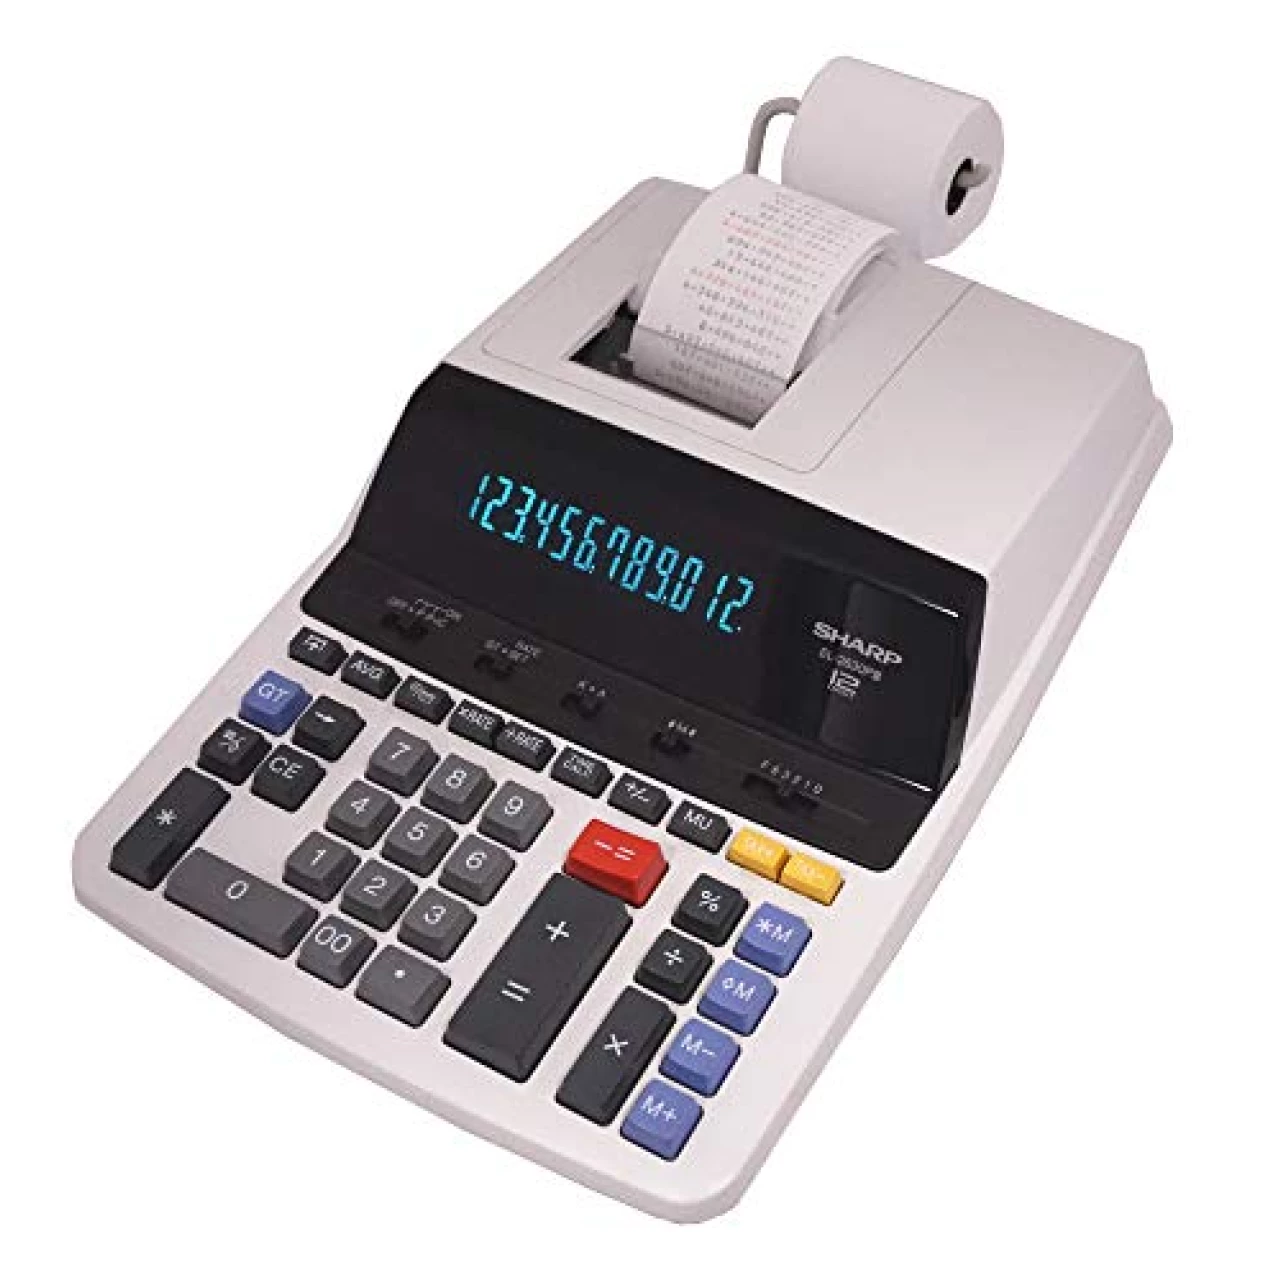 Sharp EL-2630PIII Printing Calculator